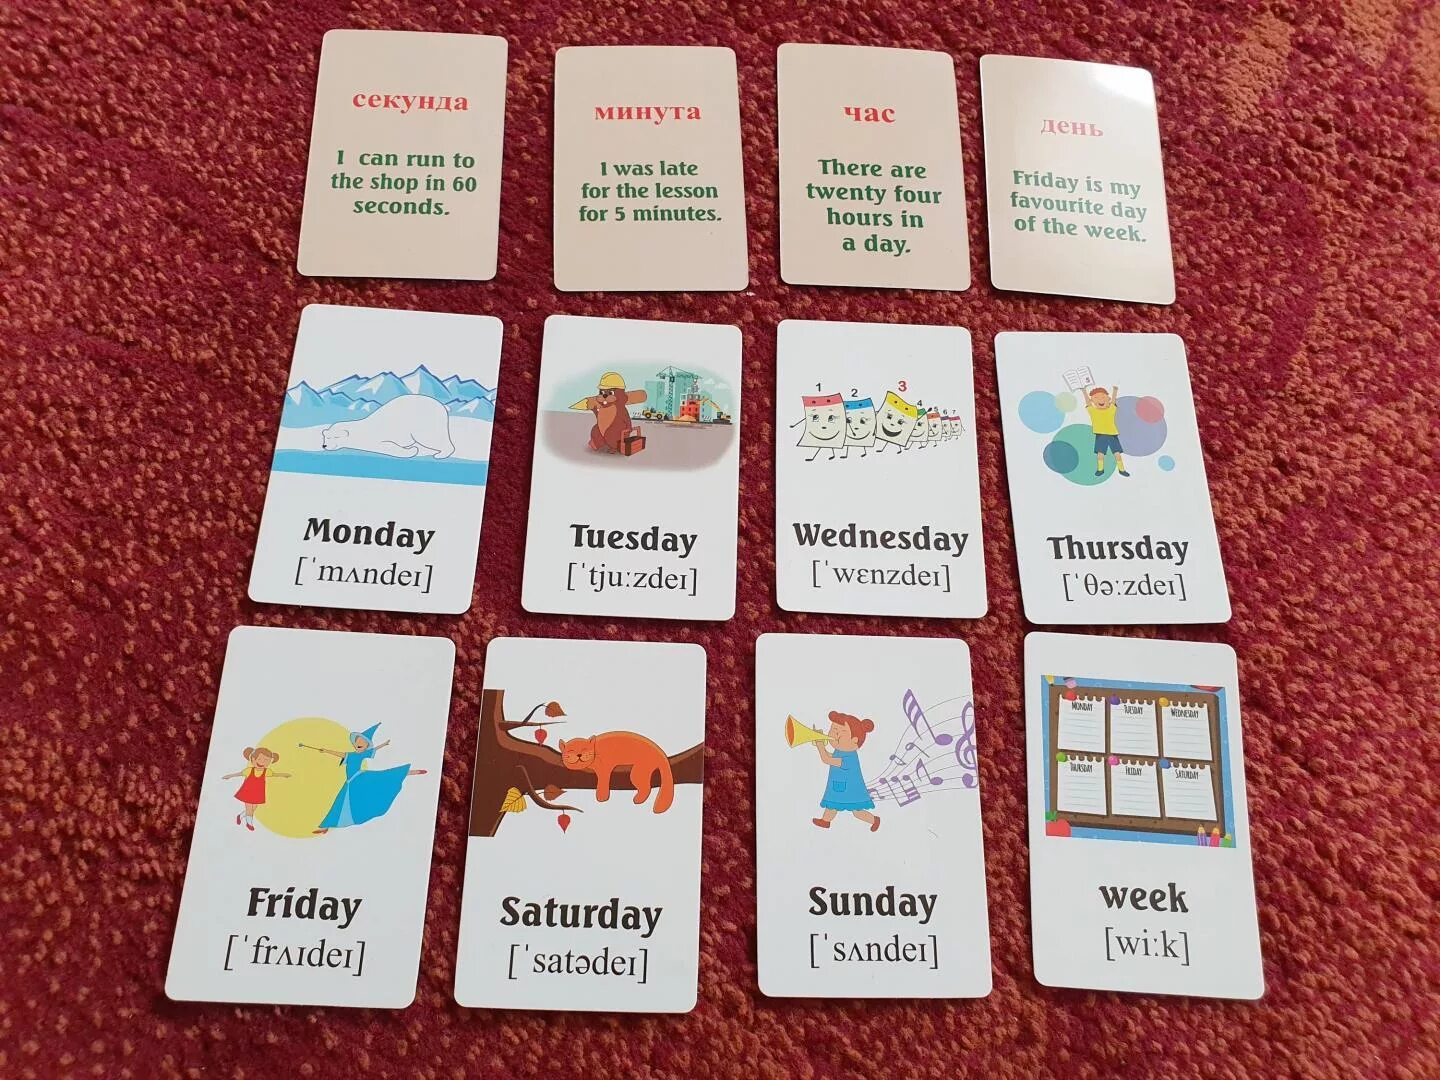 Дни недели на английском карточки. Карточки с днями недели на английском. Дни недели карточки на английском языке. Карточки с днями недели по английскому языку.